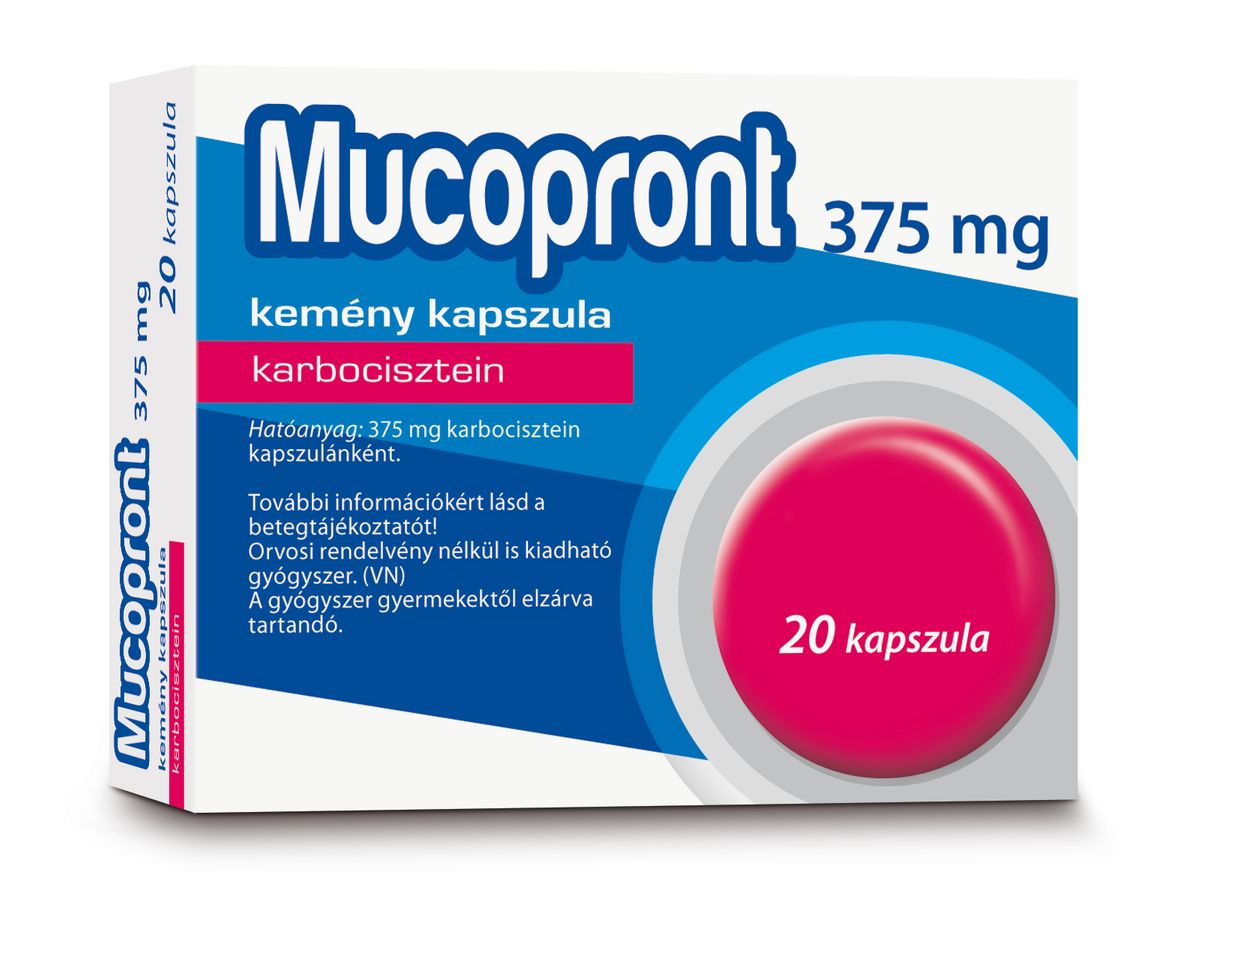 Mucopront 375 mg kemény kapszula 